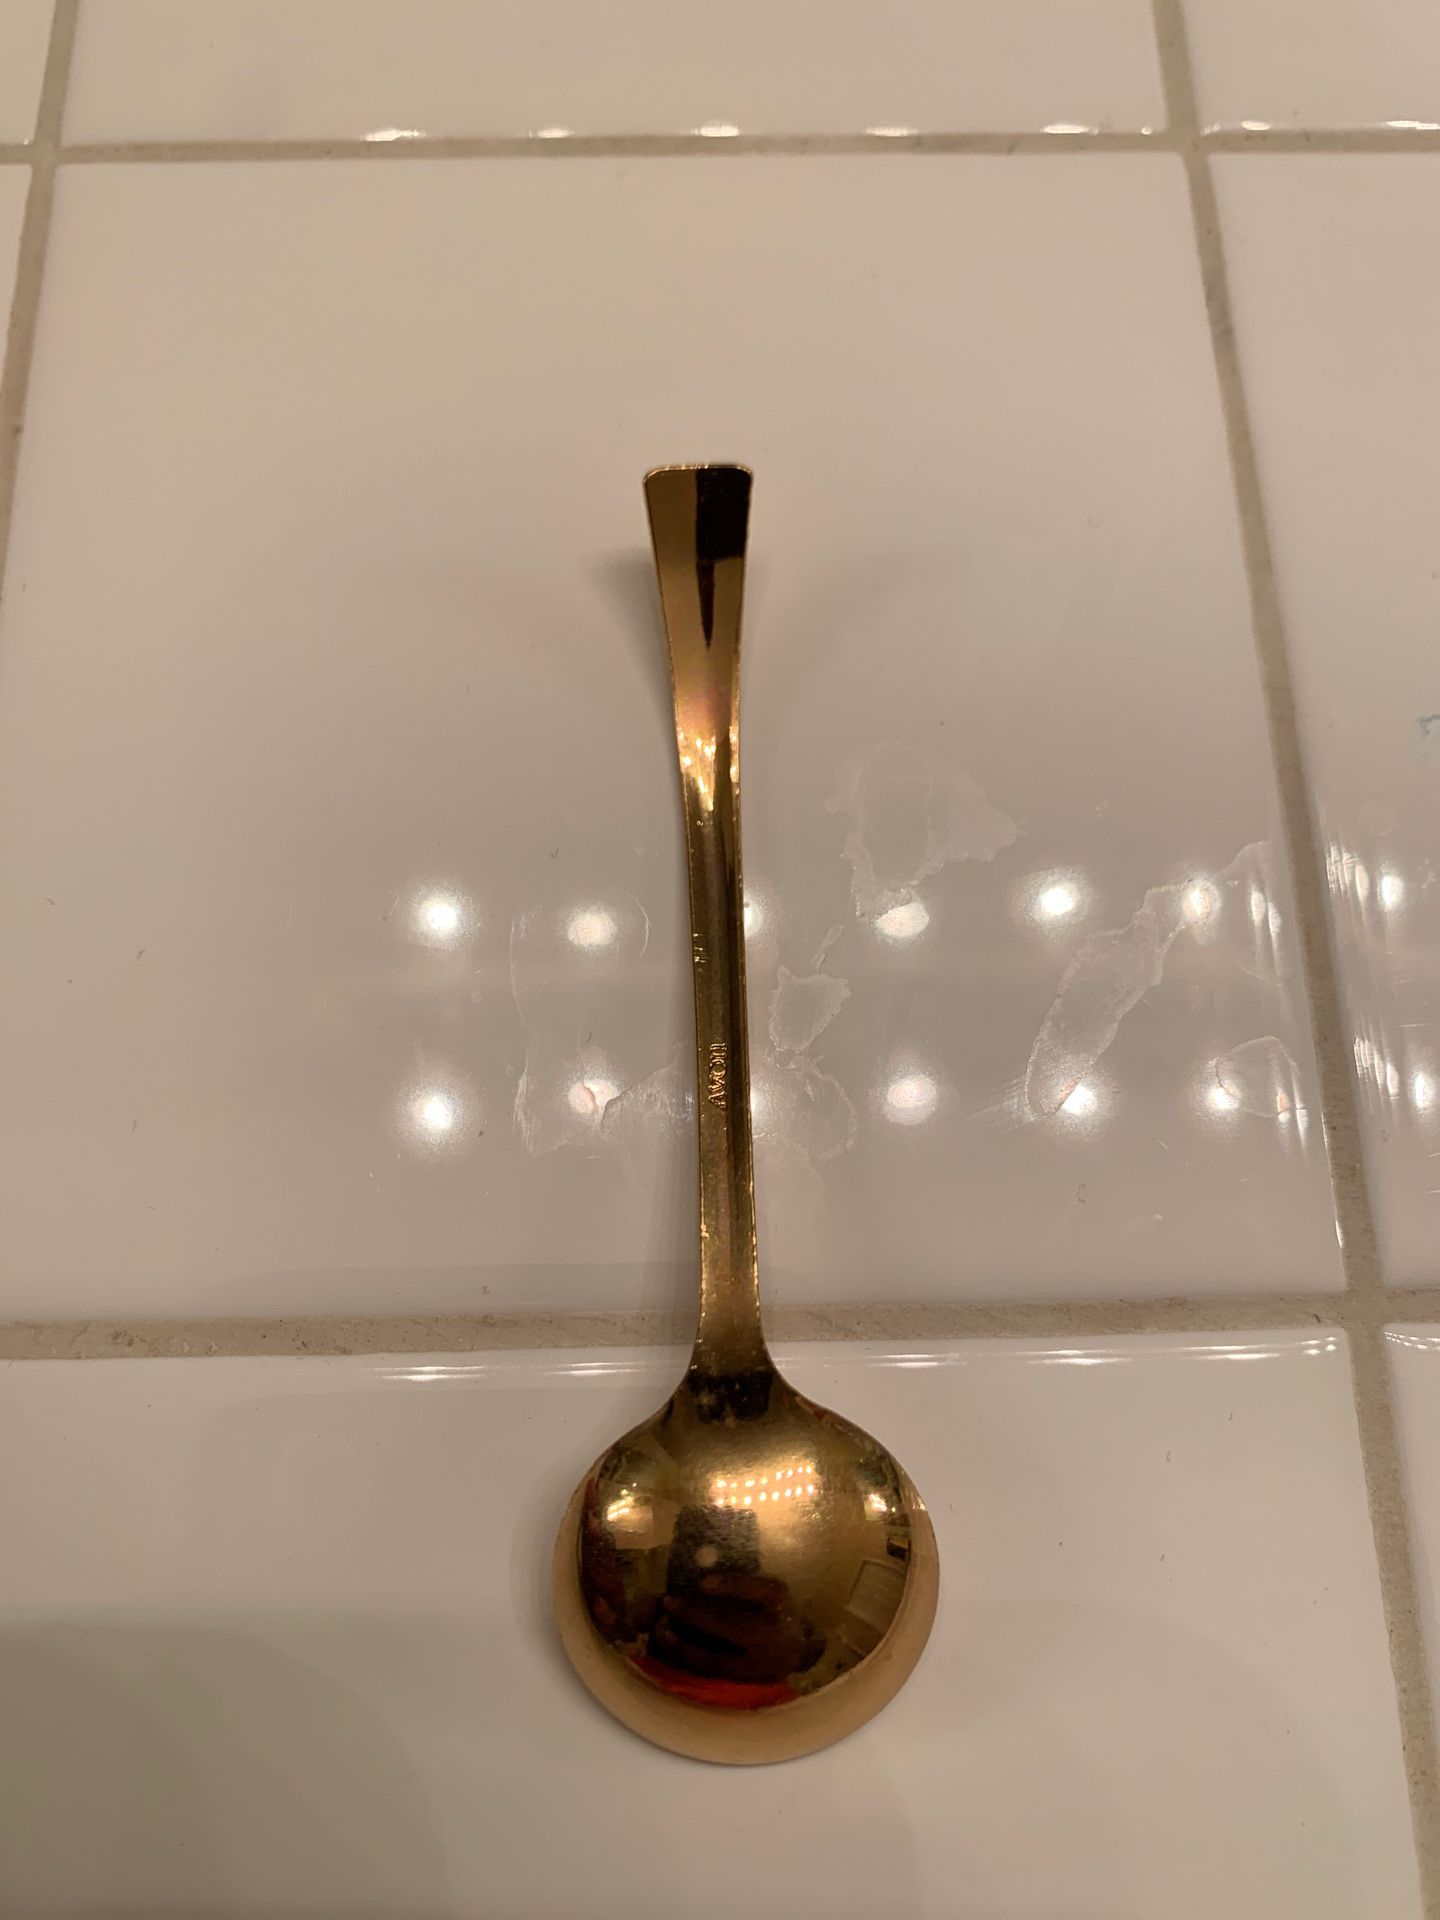 Gold tea spoon